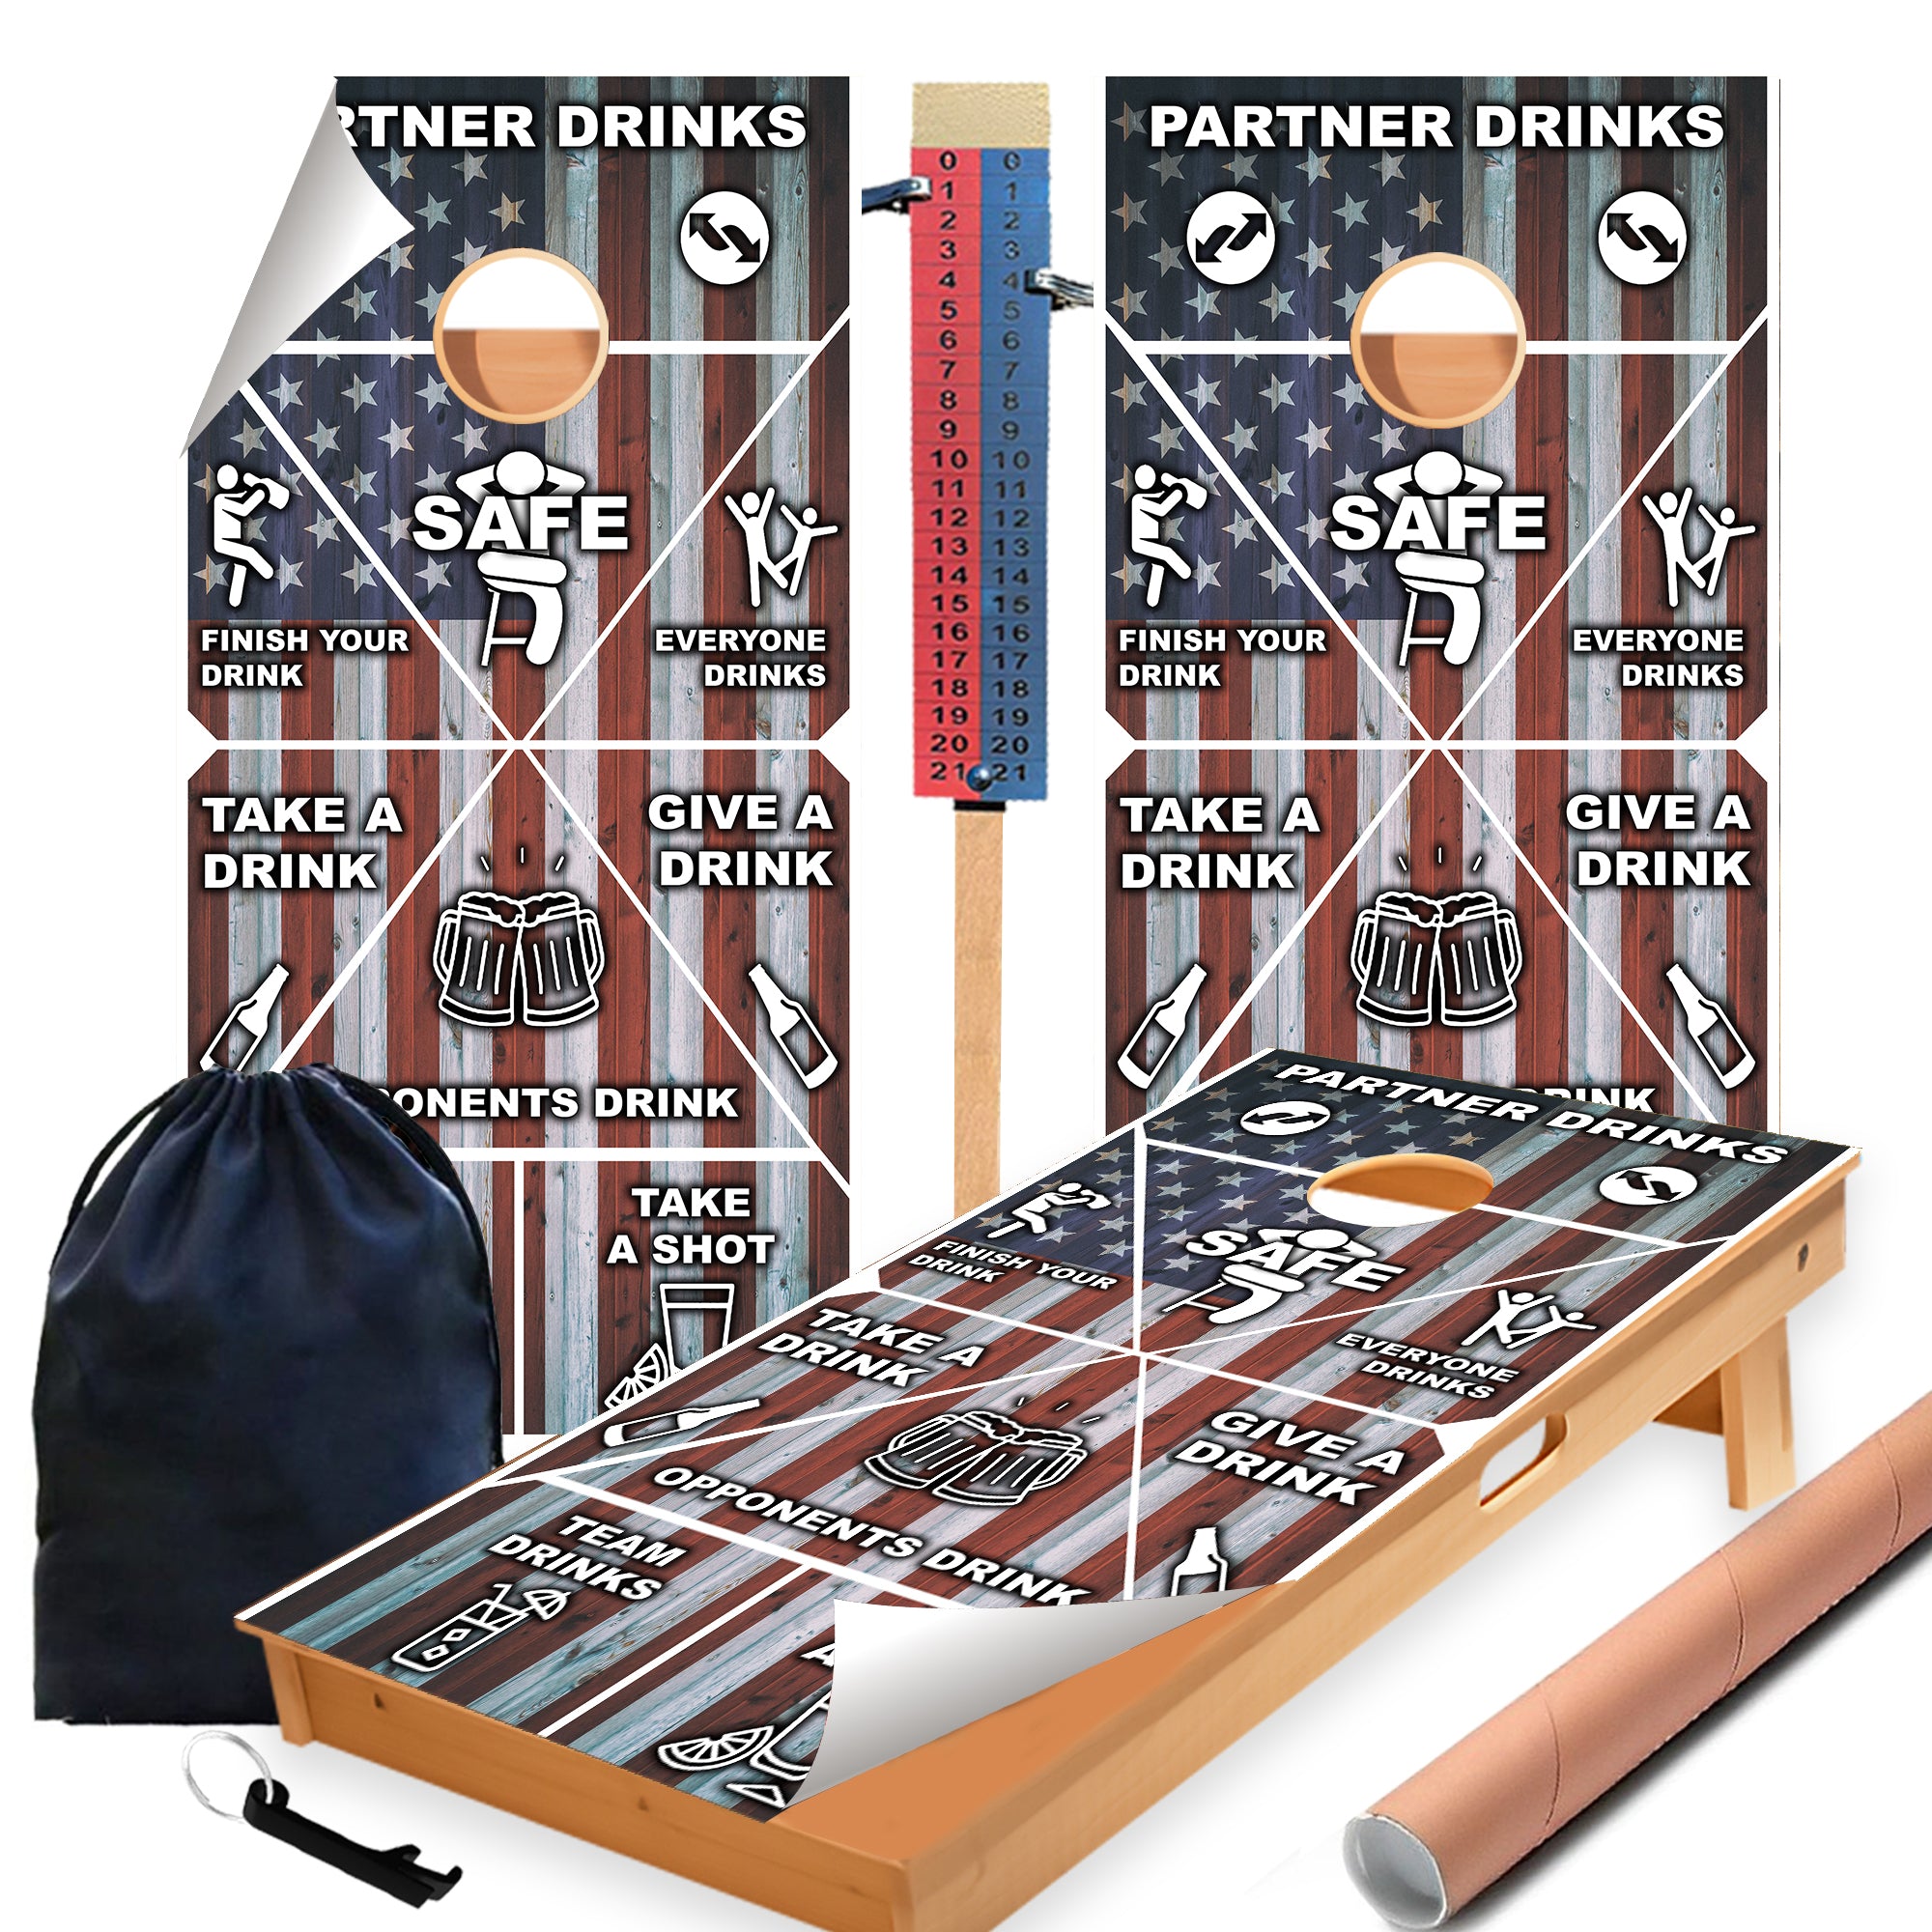 USA Drinking Cornhole Boards Wraps (Set of 2)